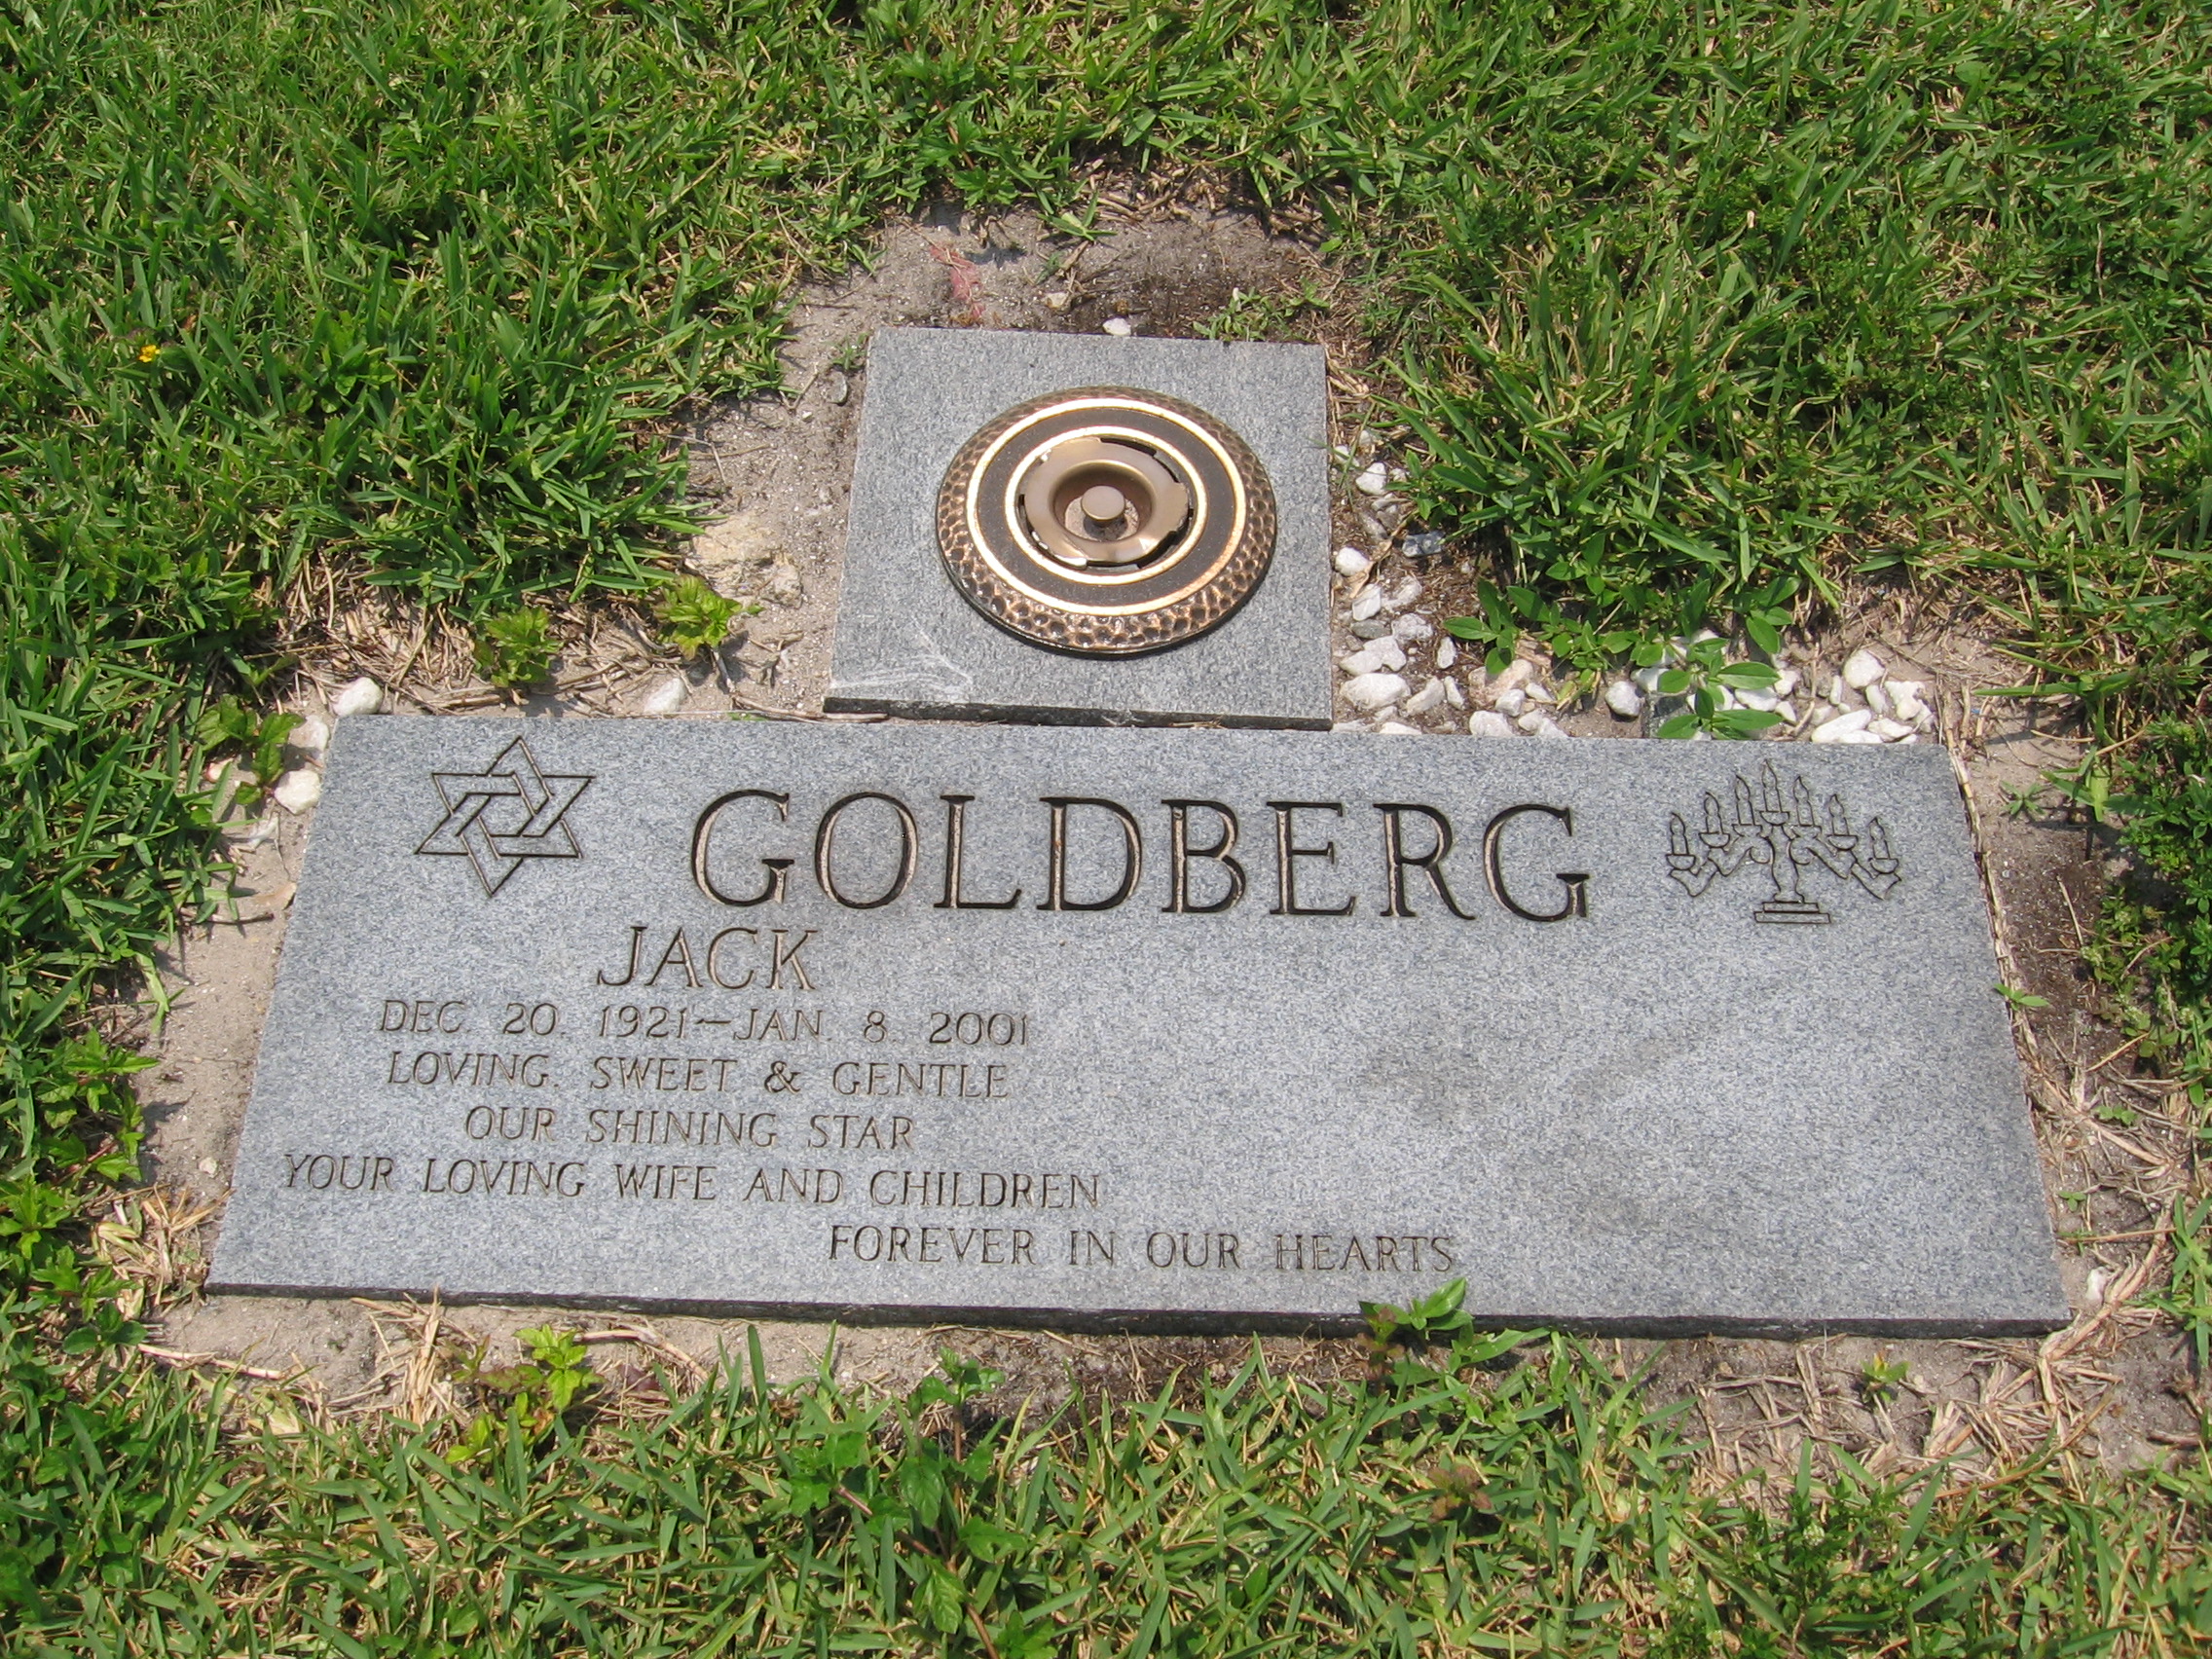 Jack Goldberg